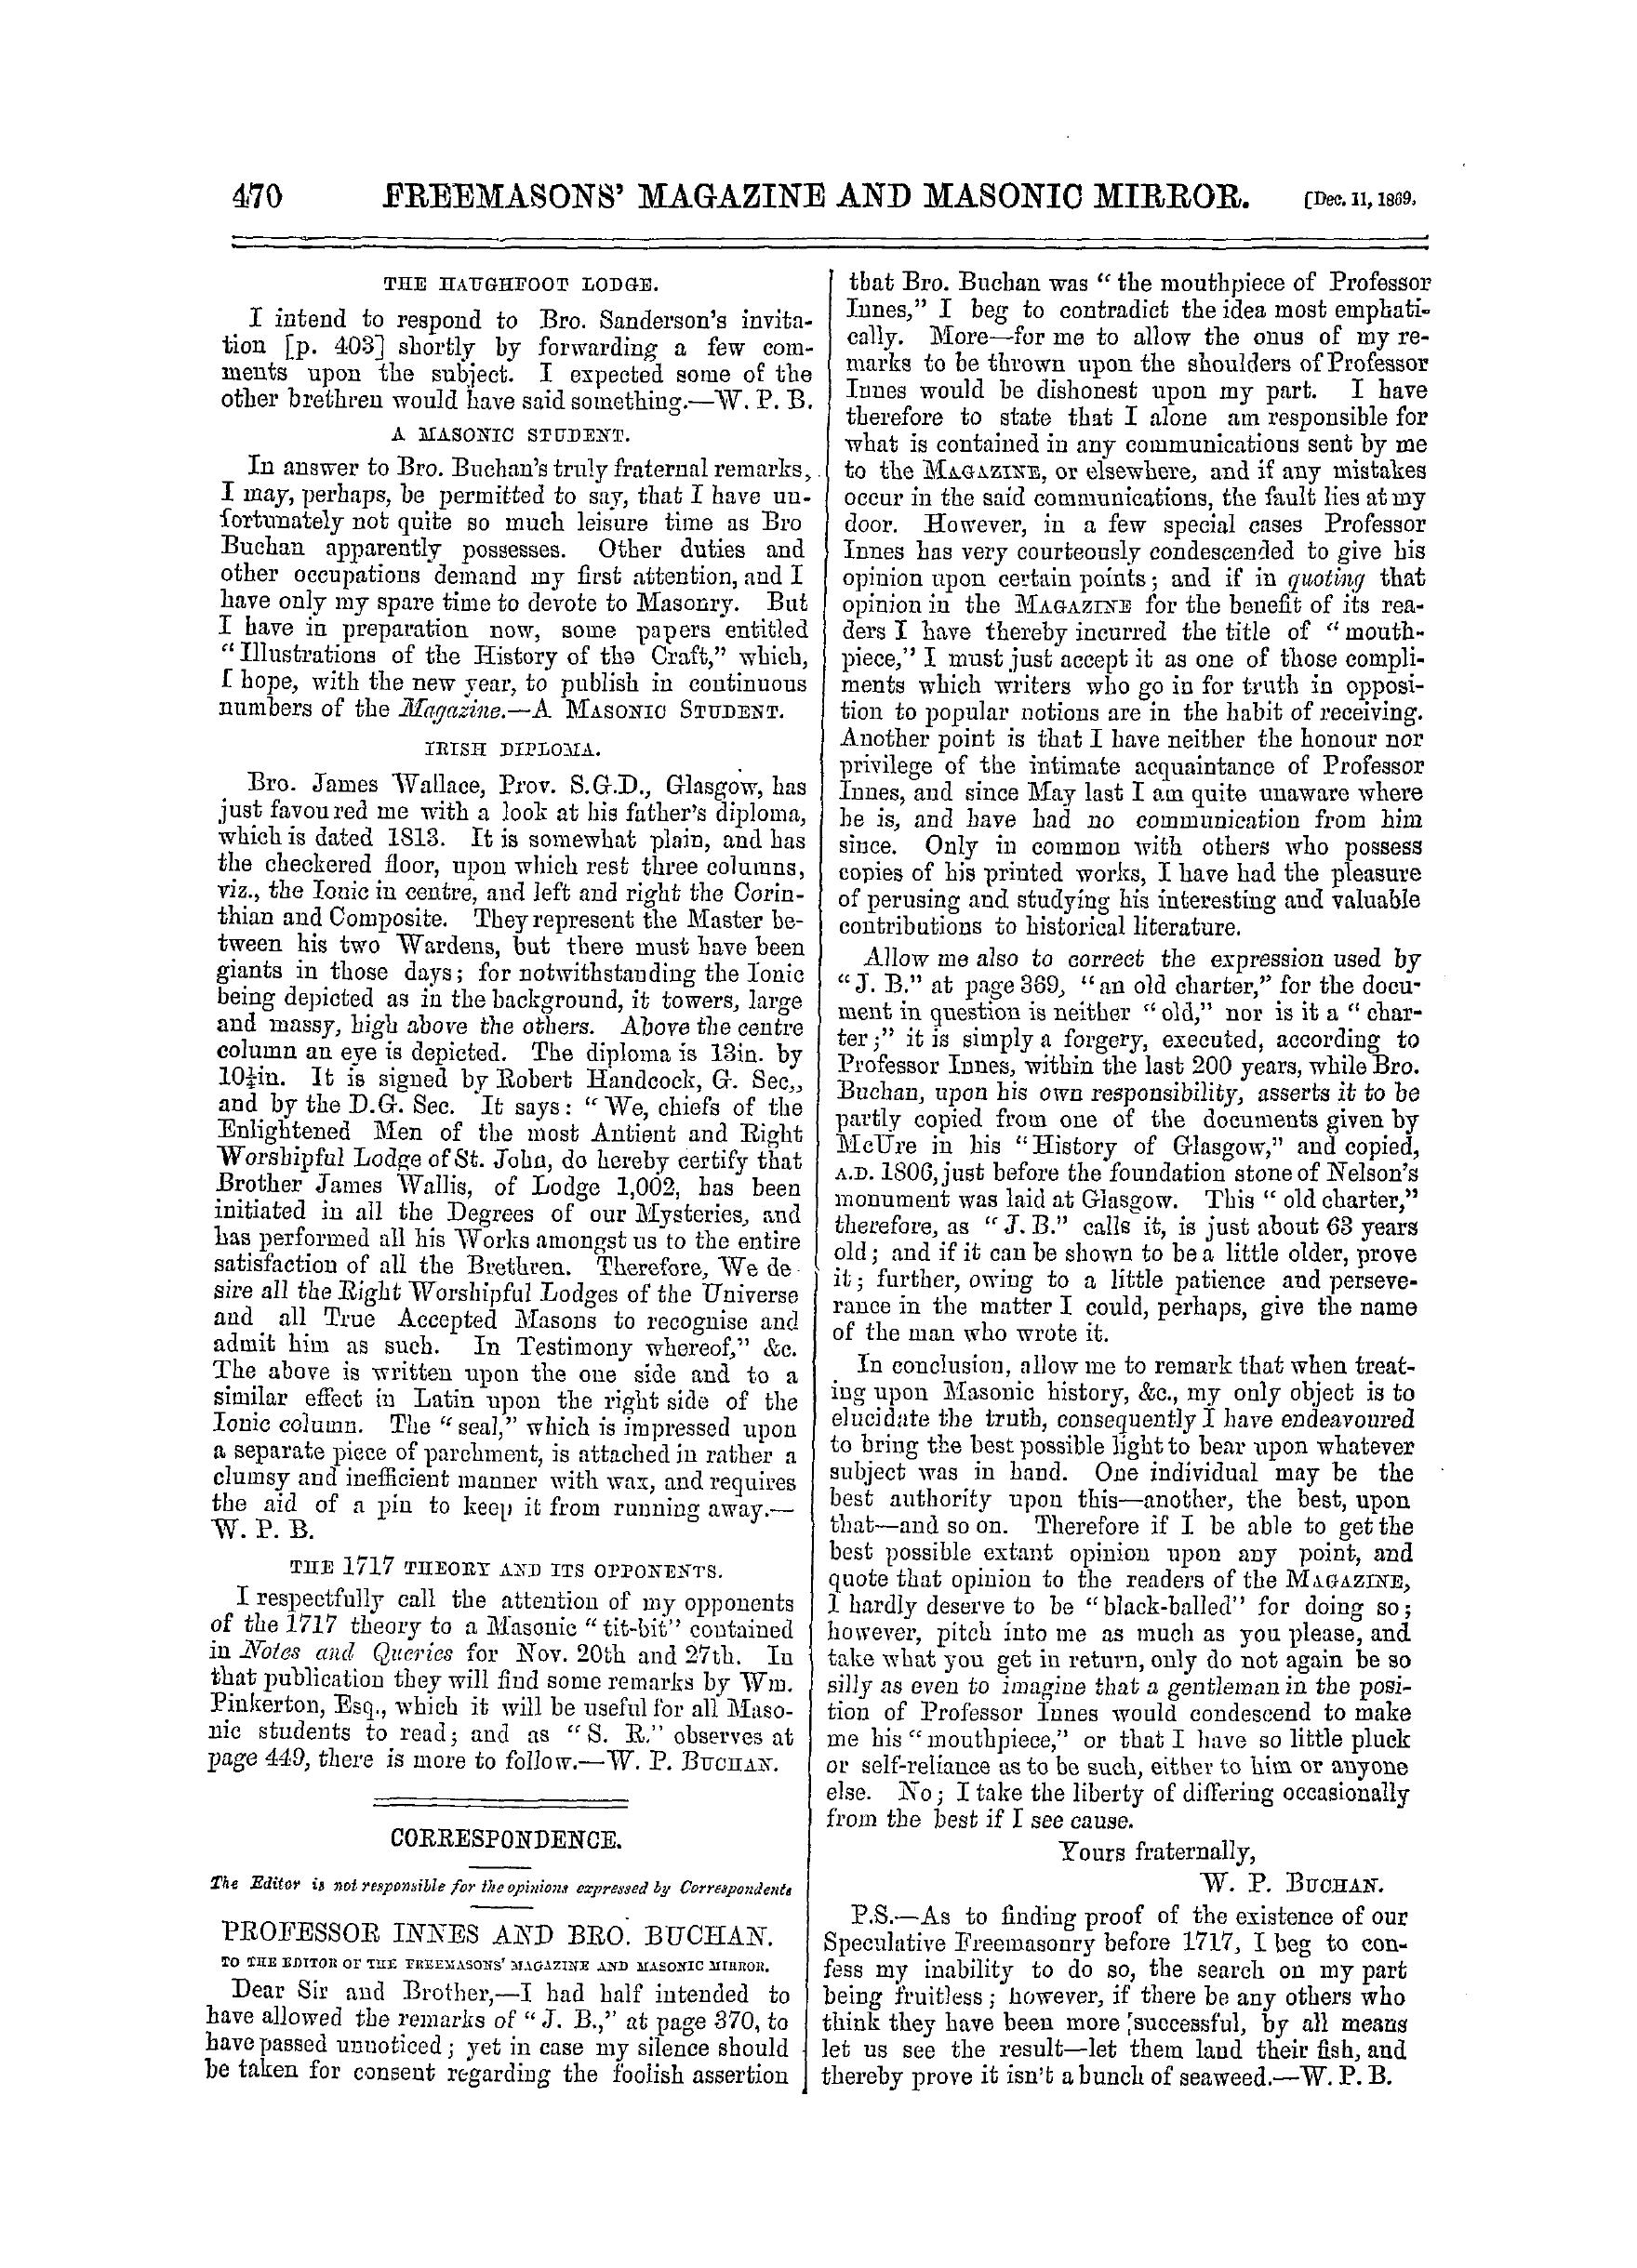 The Freemasons' Monthly Magazine: 1869-12-11 - Correspondence.